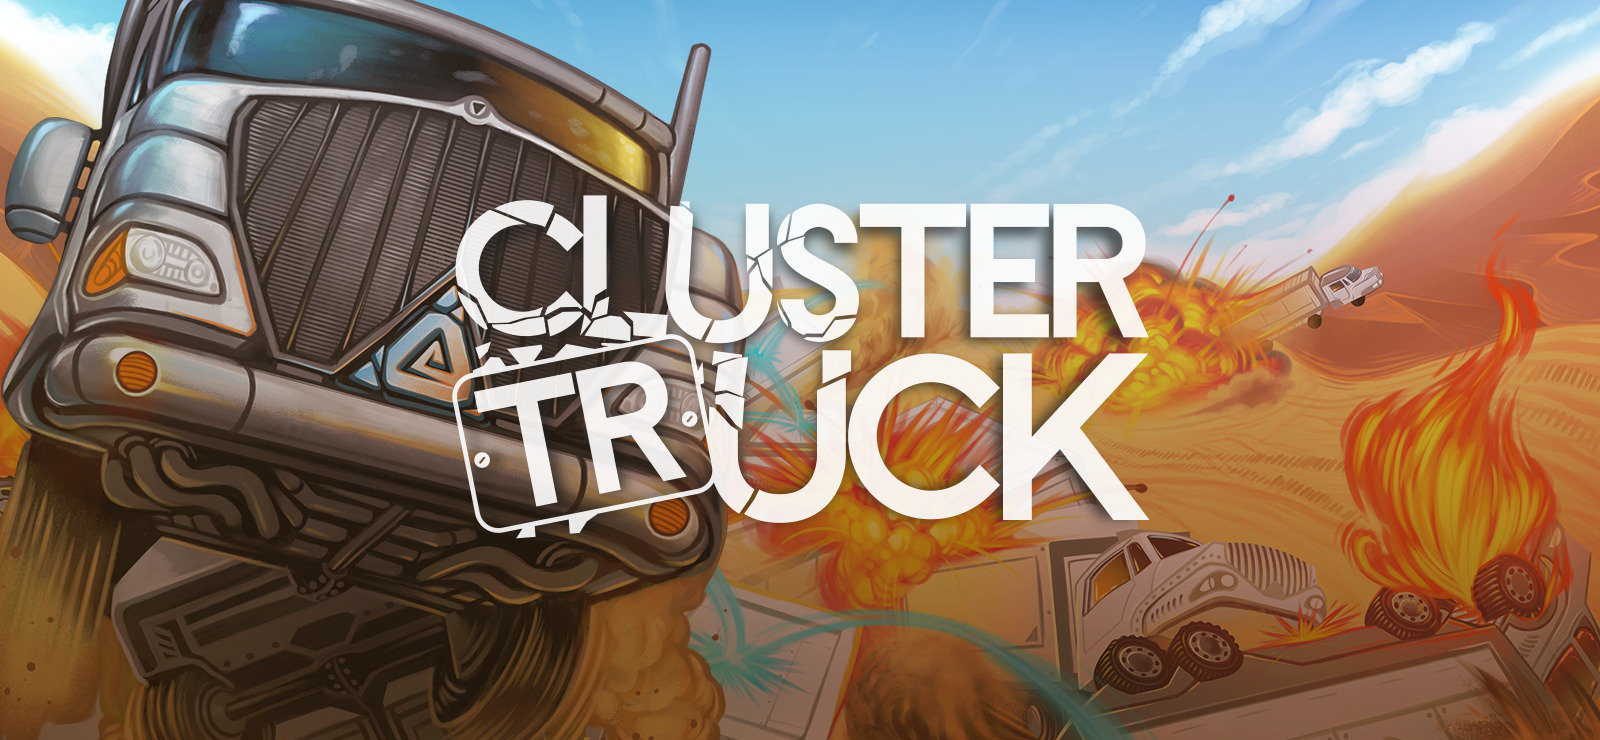 cluster truck download torrent